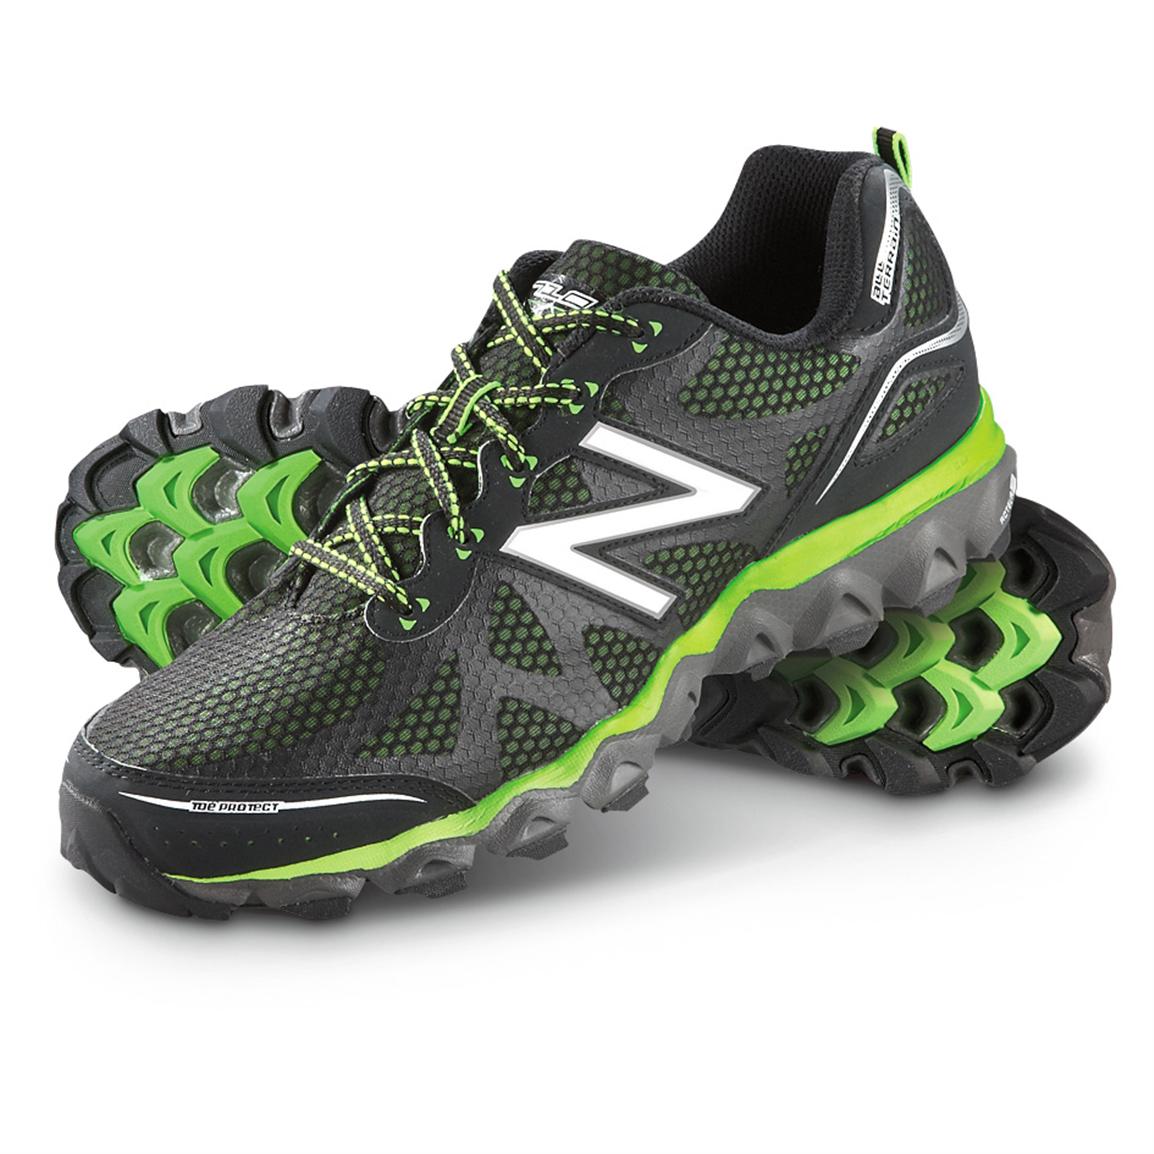 Men's New Balance 710v2 Trail Running Shoes - 591302, Running Shoes